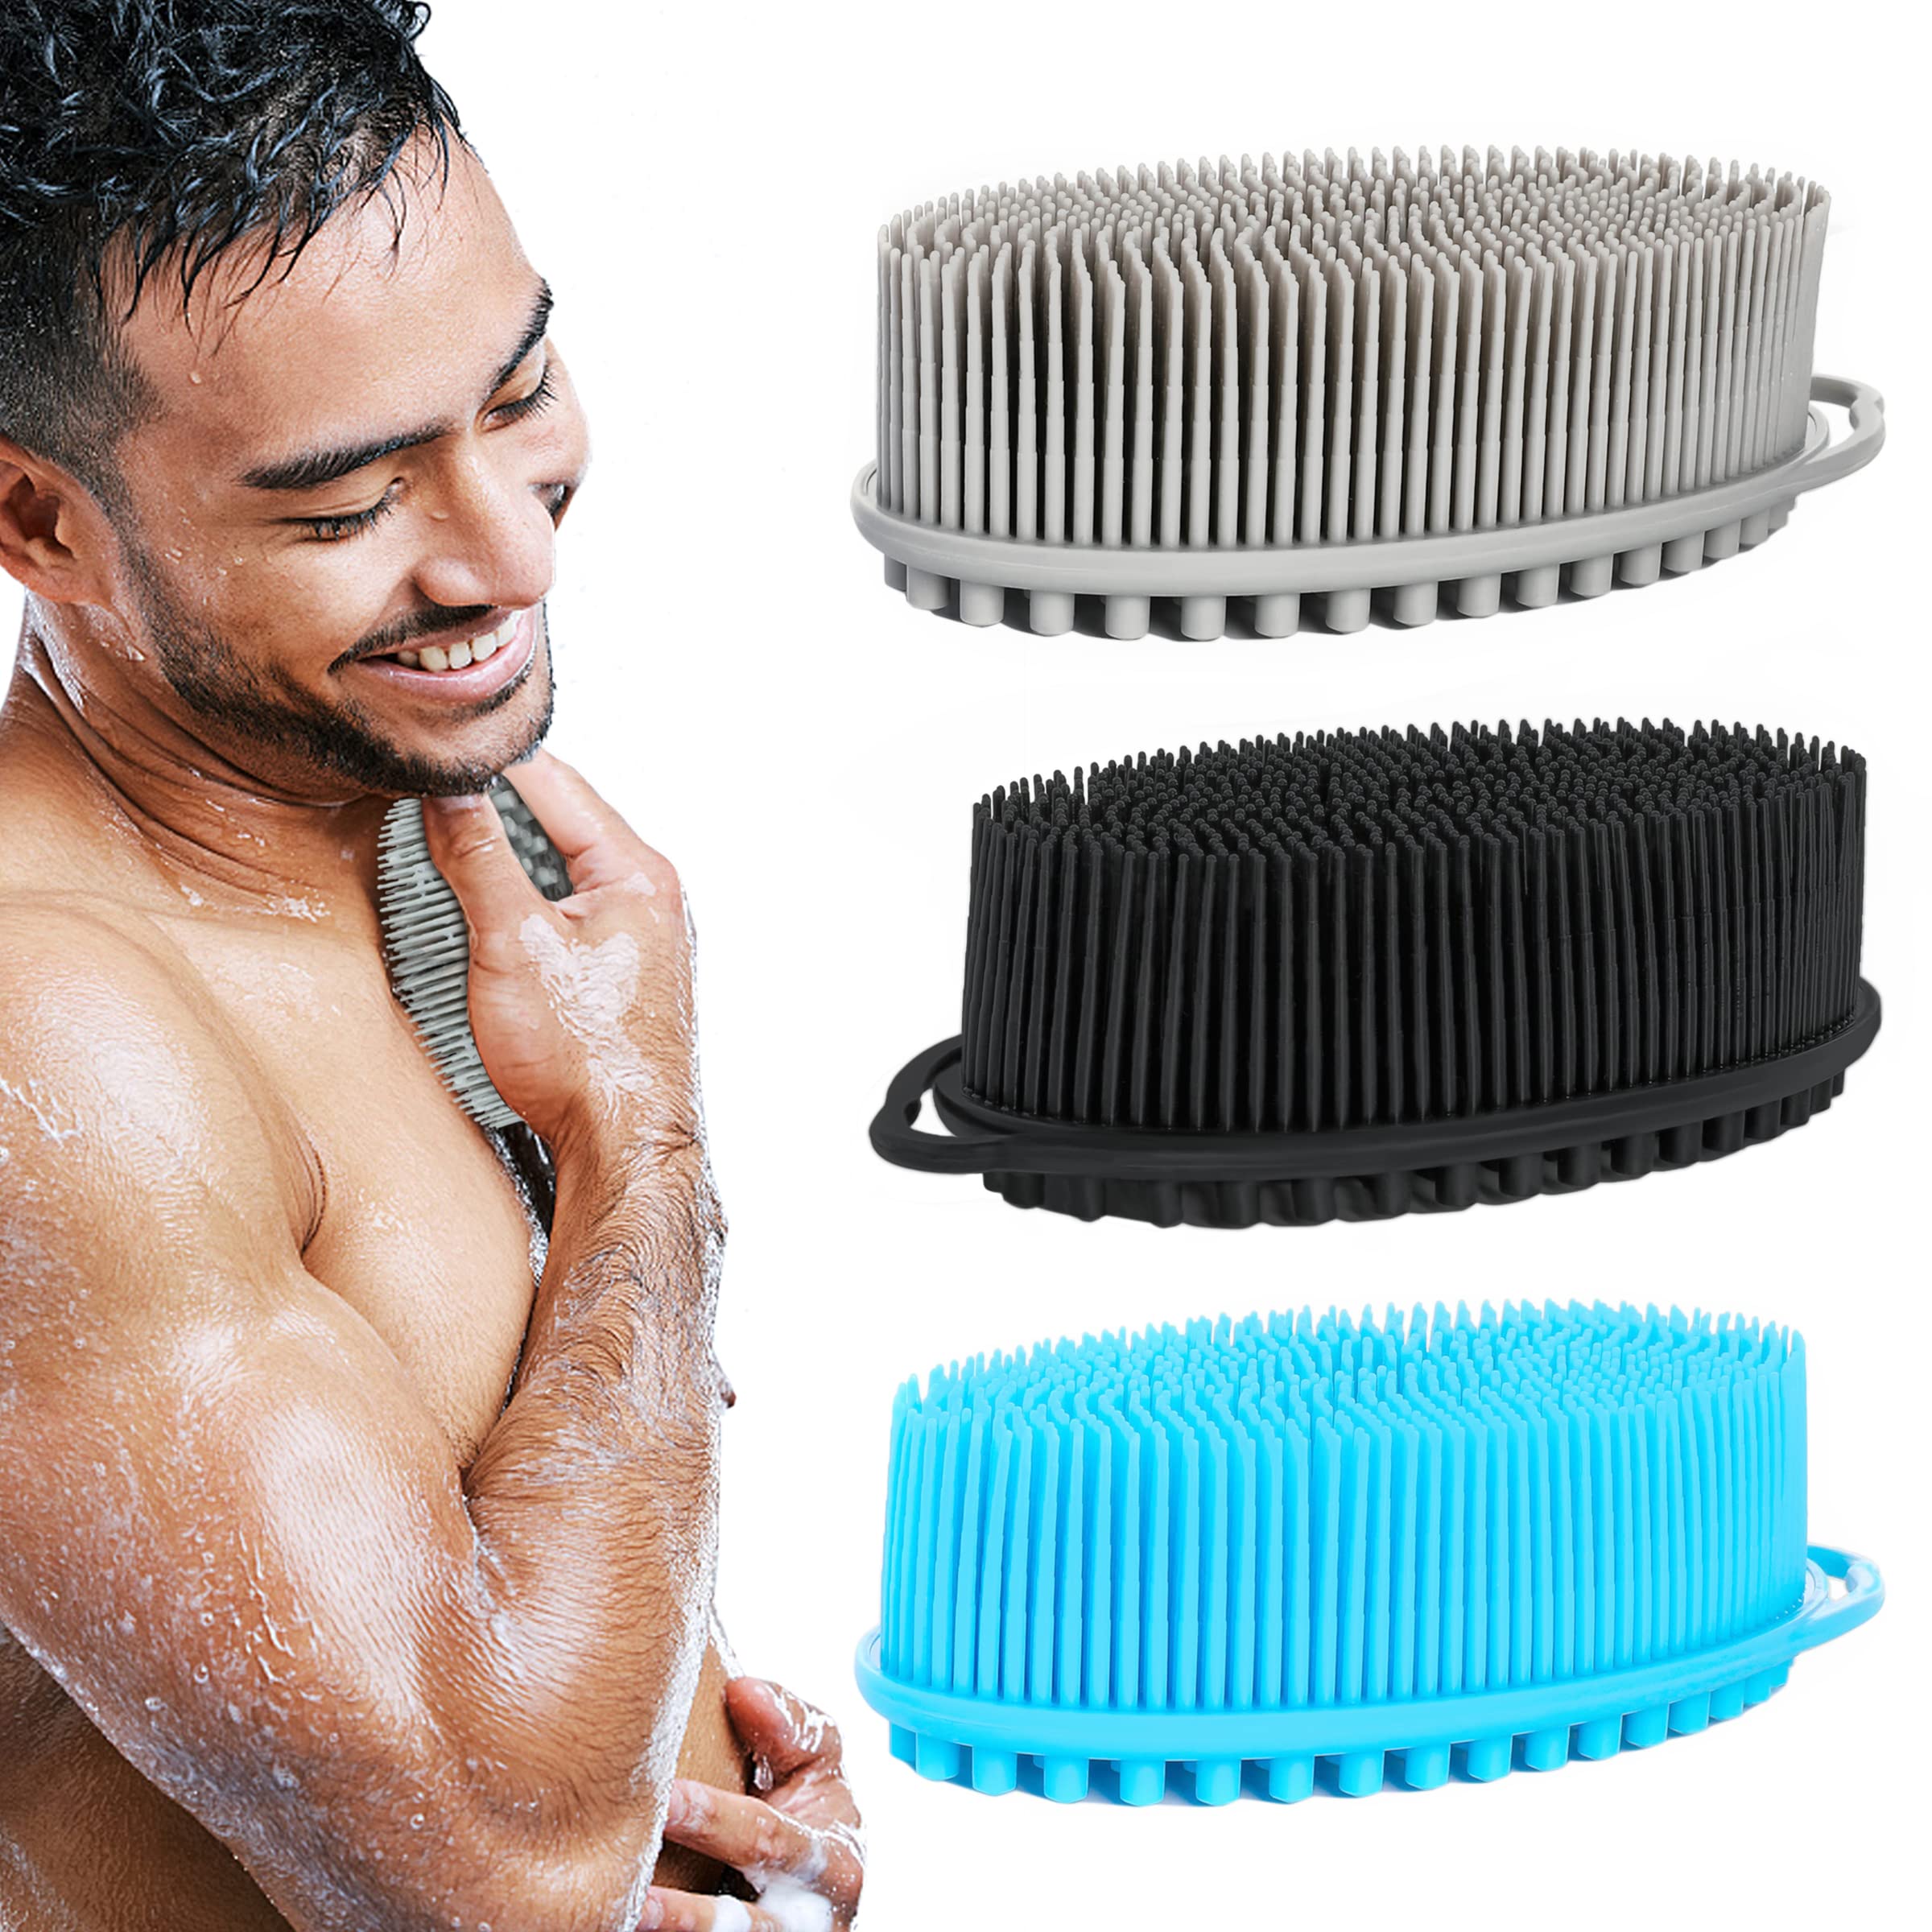 Silicone Loofah Exfoliating Body Scrubber Set of 3 Soft Bath Sponge/Shower Brush for Sensitive Kids Women Men All Kinds of Skin (Black/Gray/Blue)